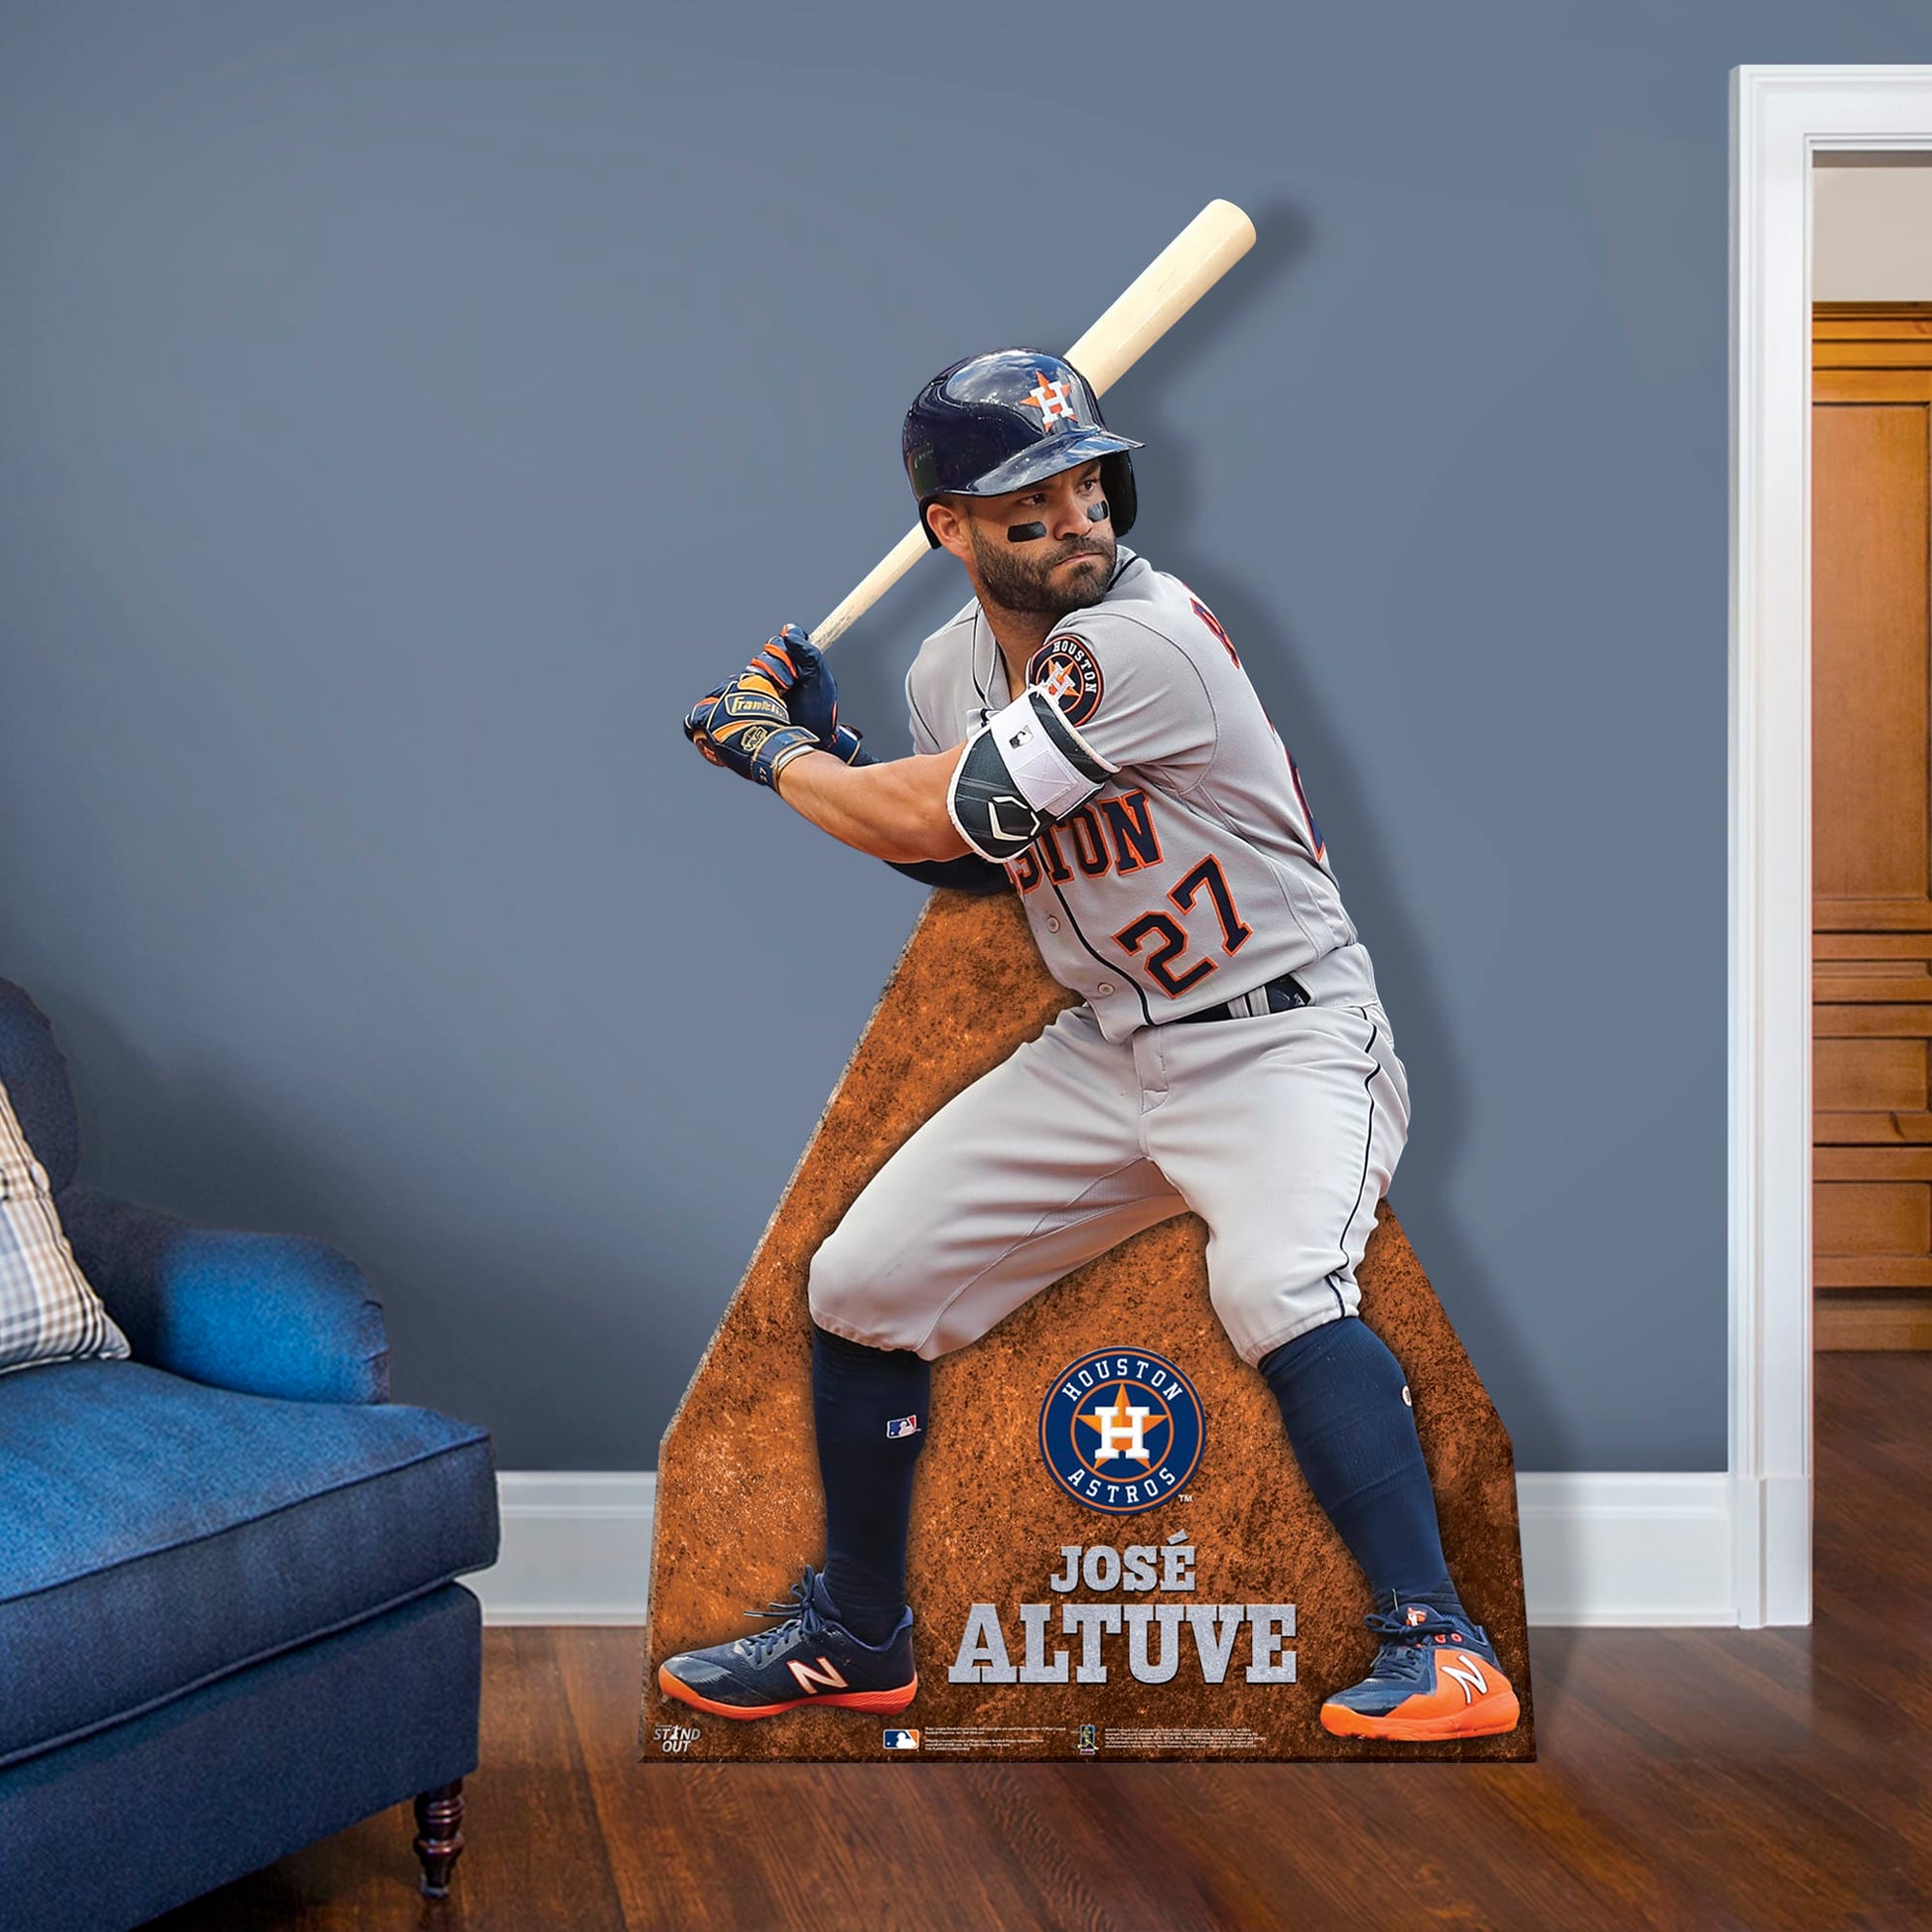 Houston Astros: Jose Altuve Foam Core Cutout - Officially Licensed